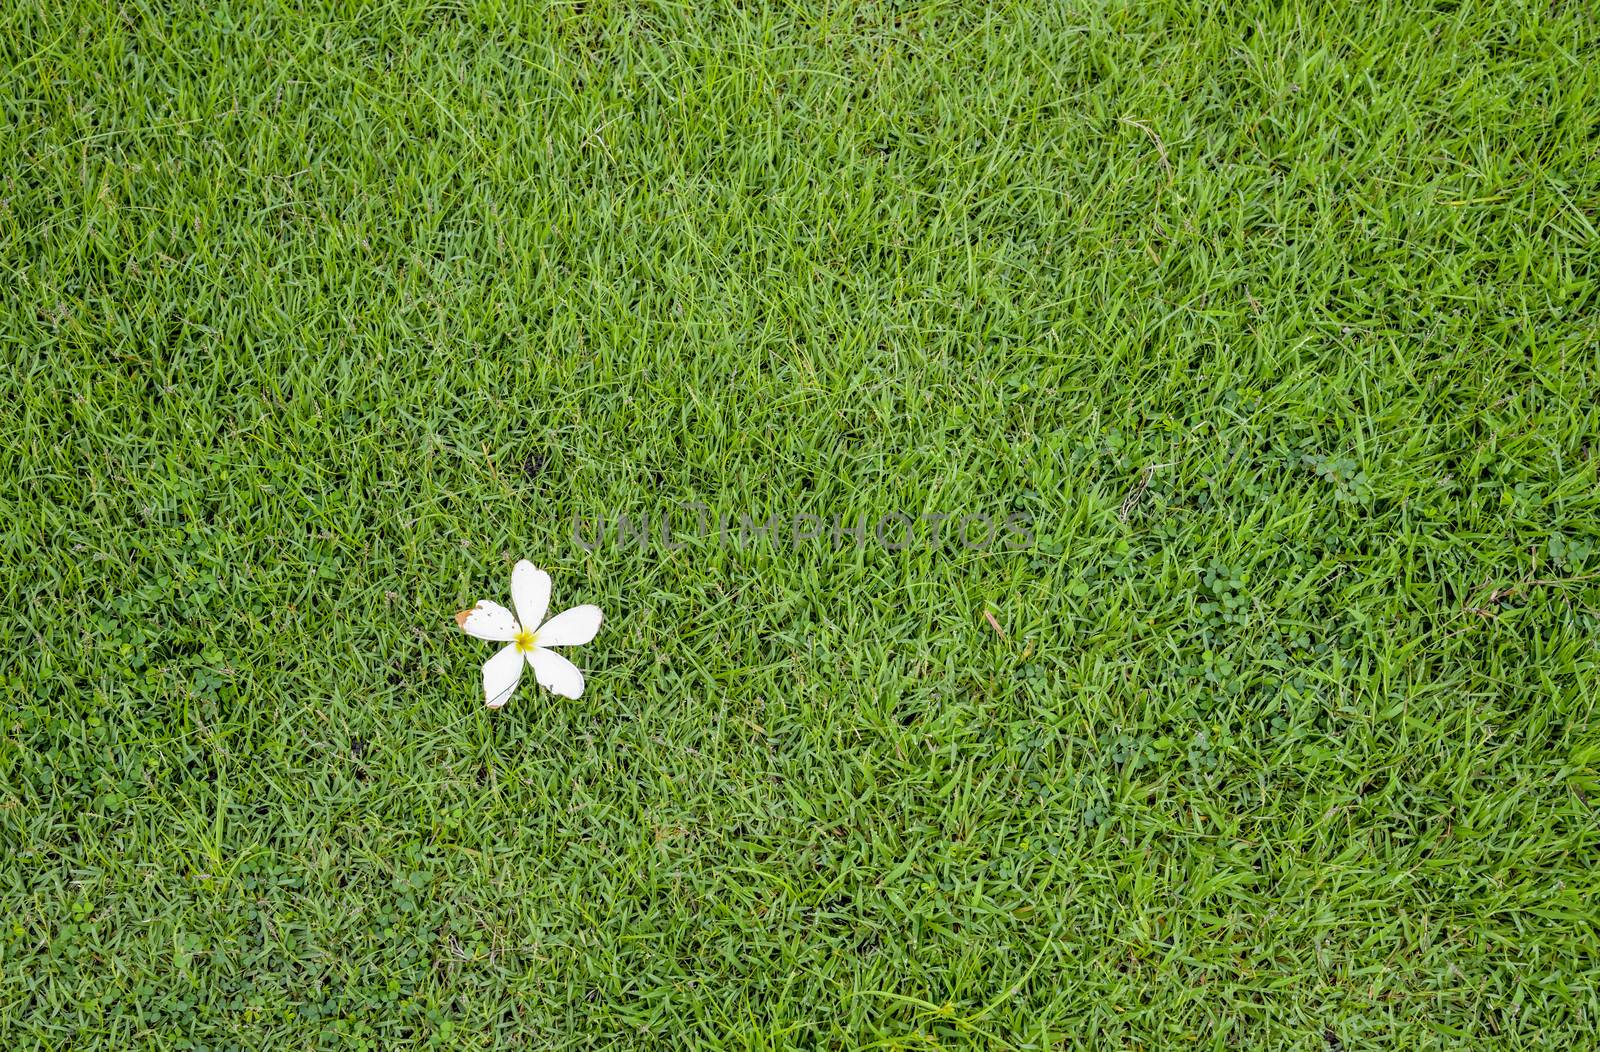 A white flower on green grass